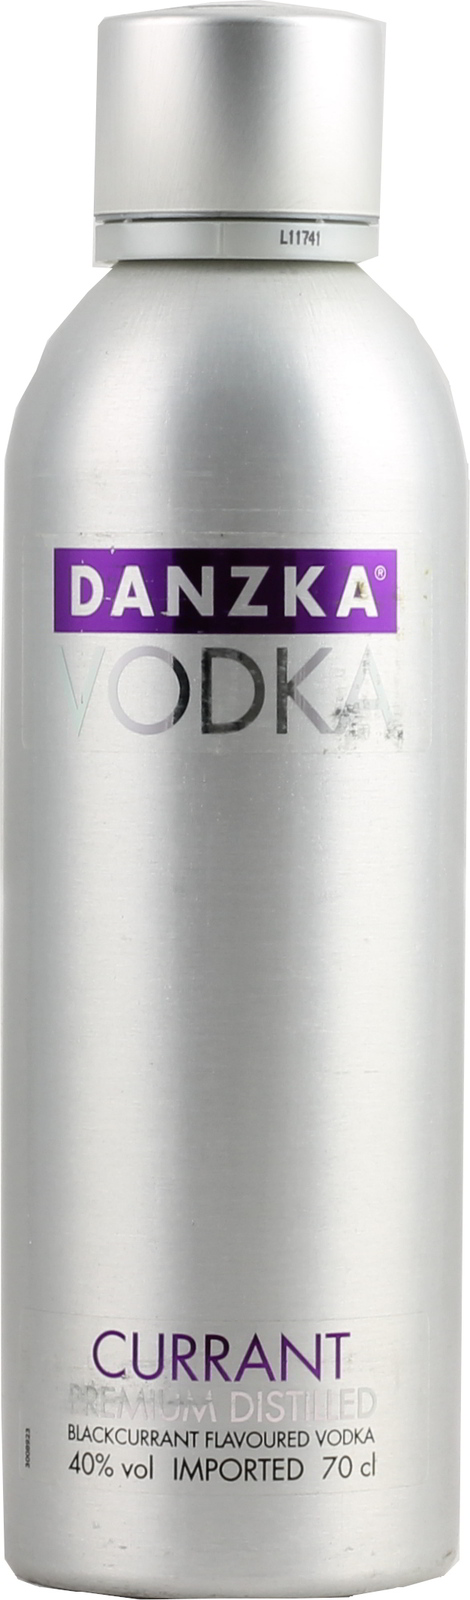 Danzka Currant online Vodka kaufen